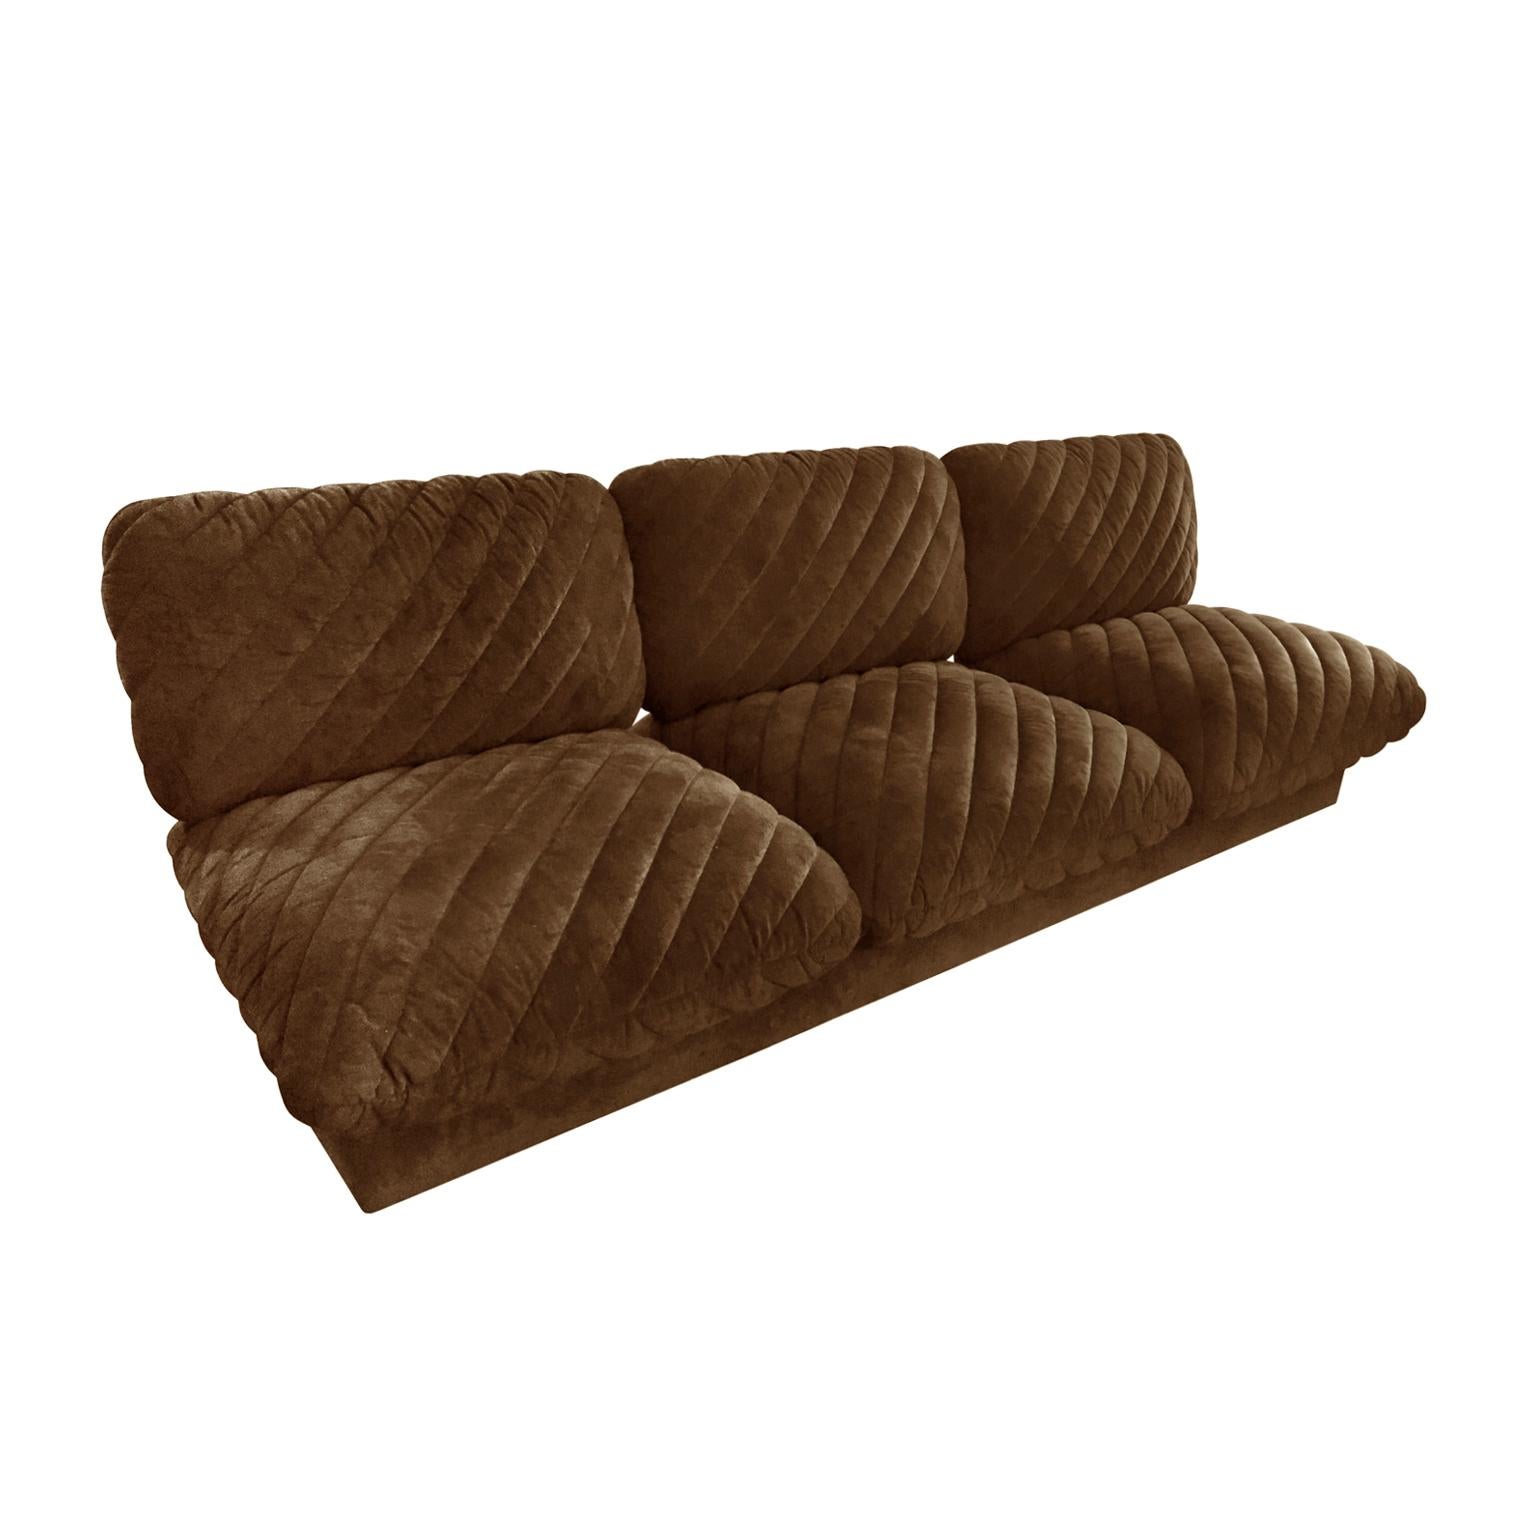 1970s Harvey Probber "Pillow Puff" Armless Three-Seat Sofa